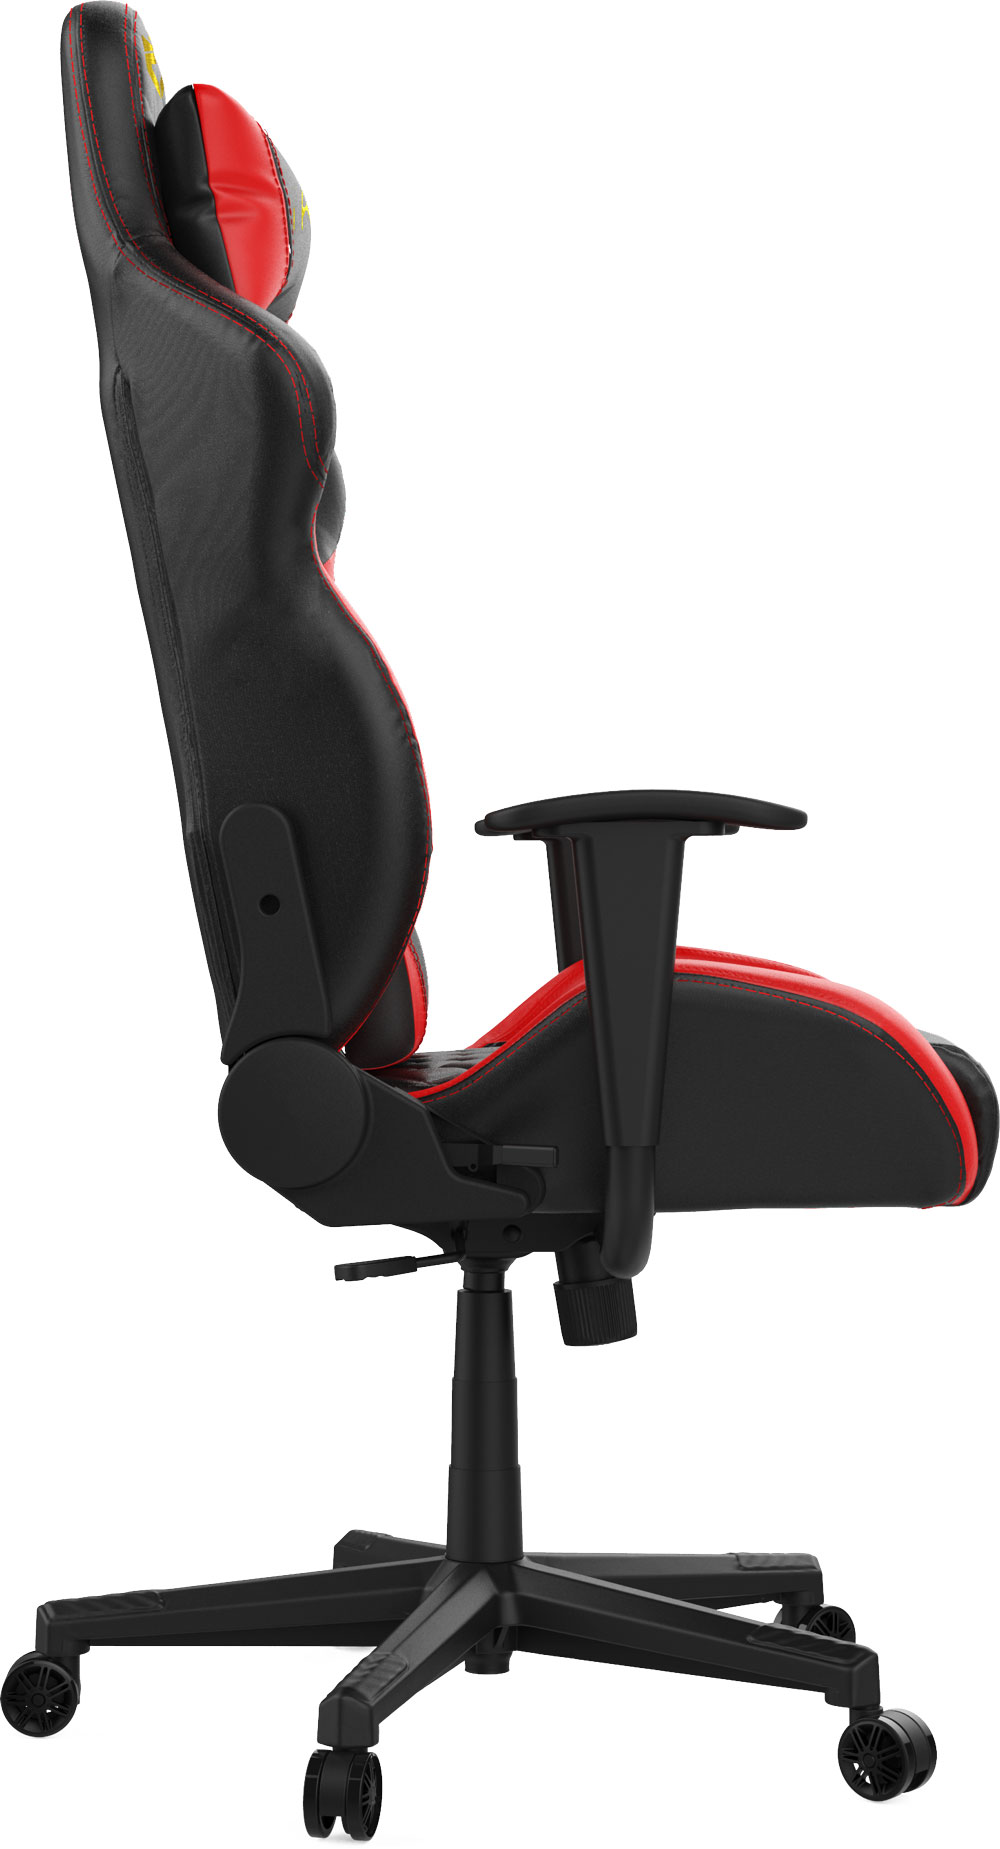 Evetech IKon-Shift-300 Gaming Chair - Black/Red